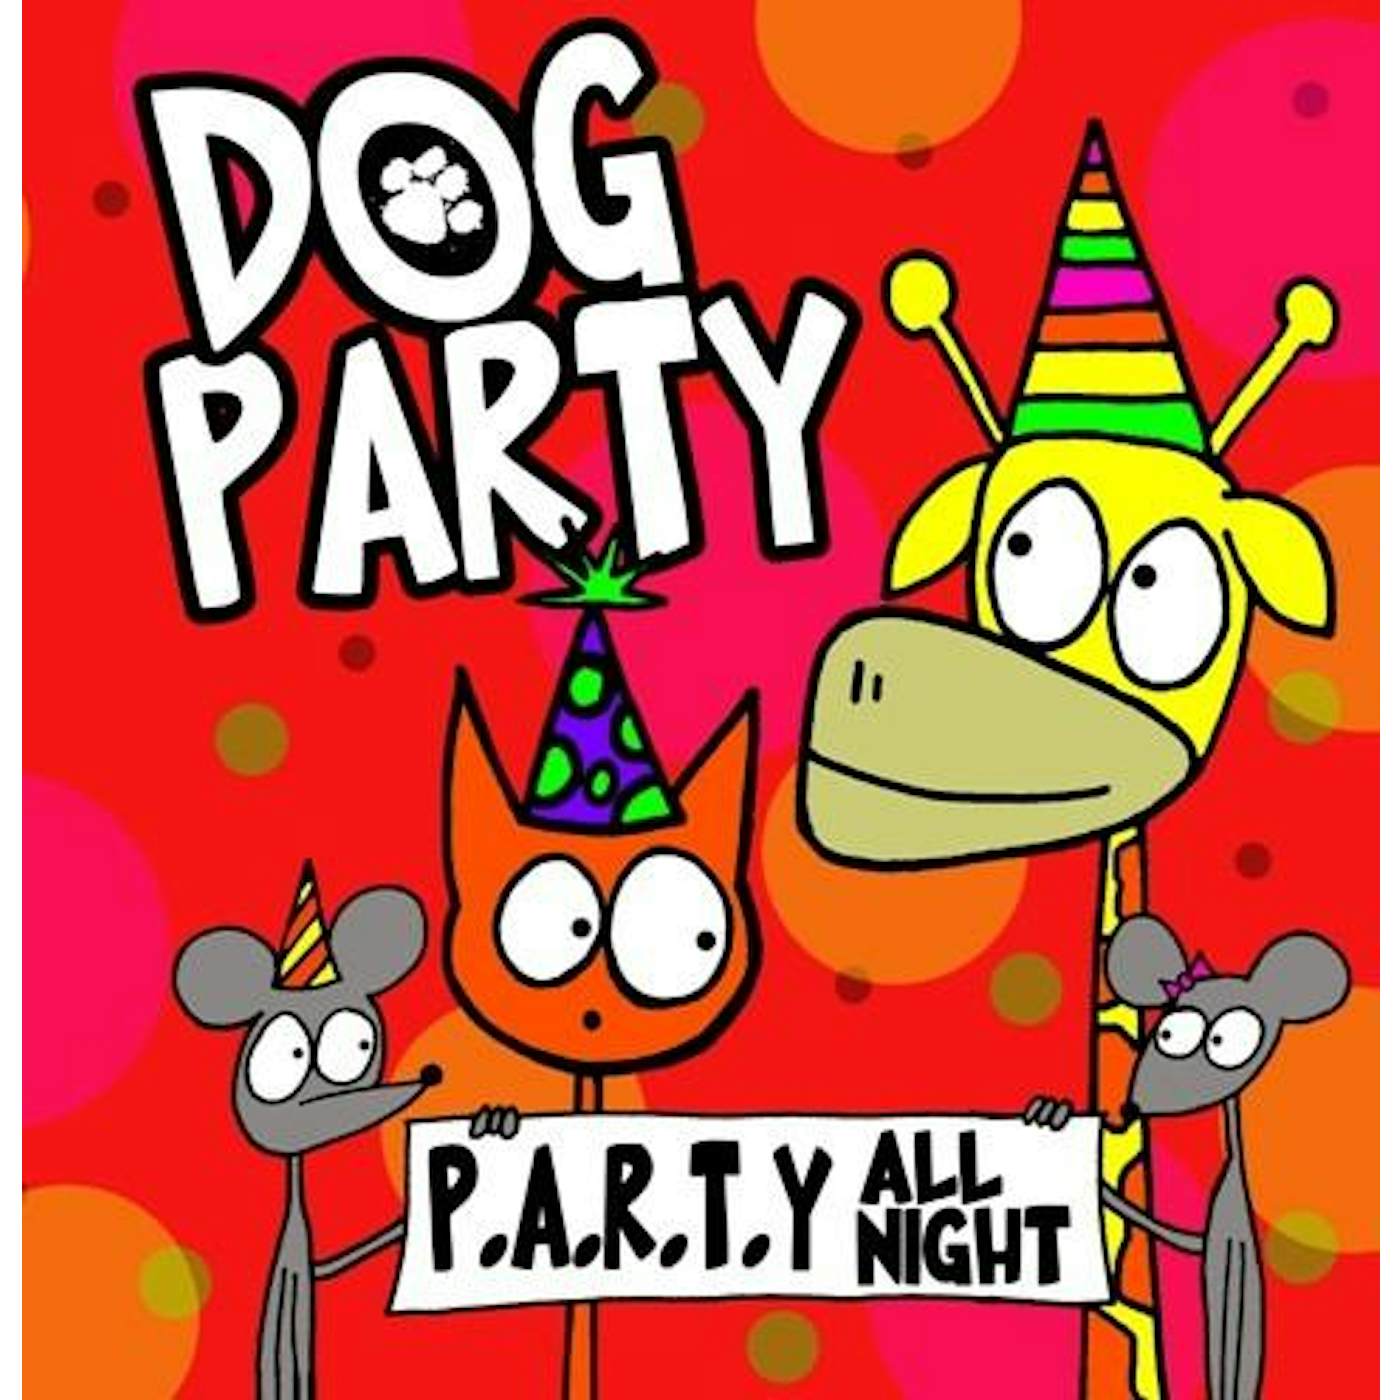 Dog Party PARTY! Vinyl Record